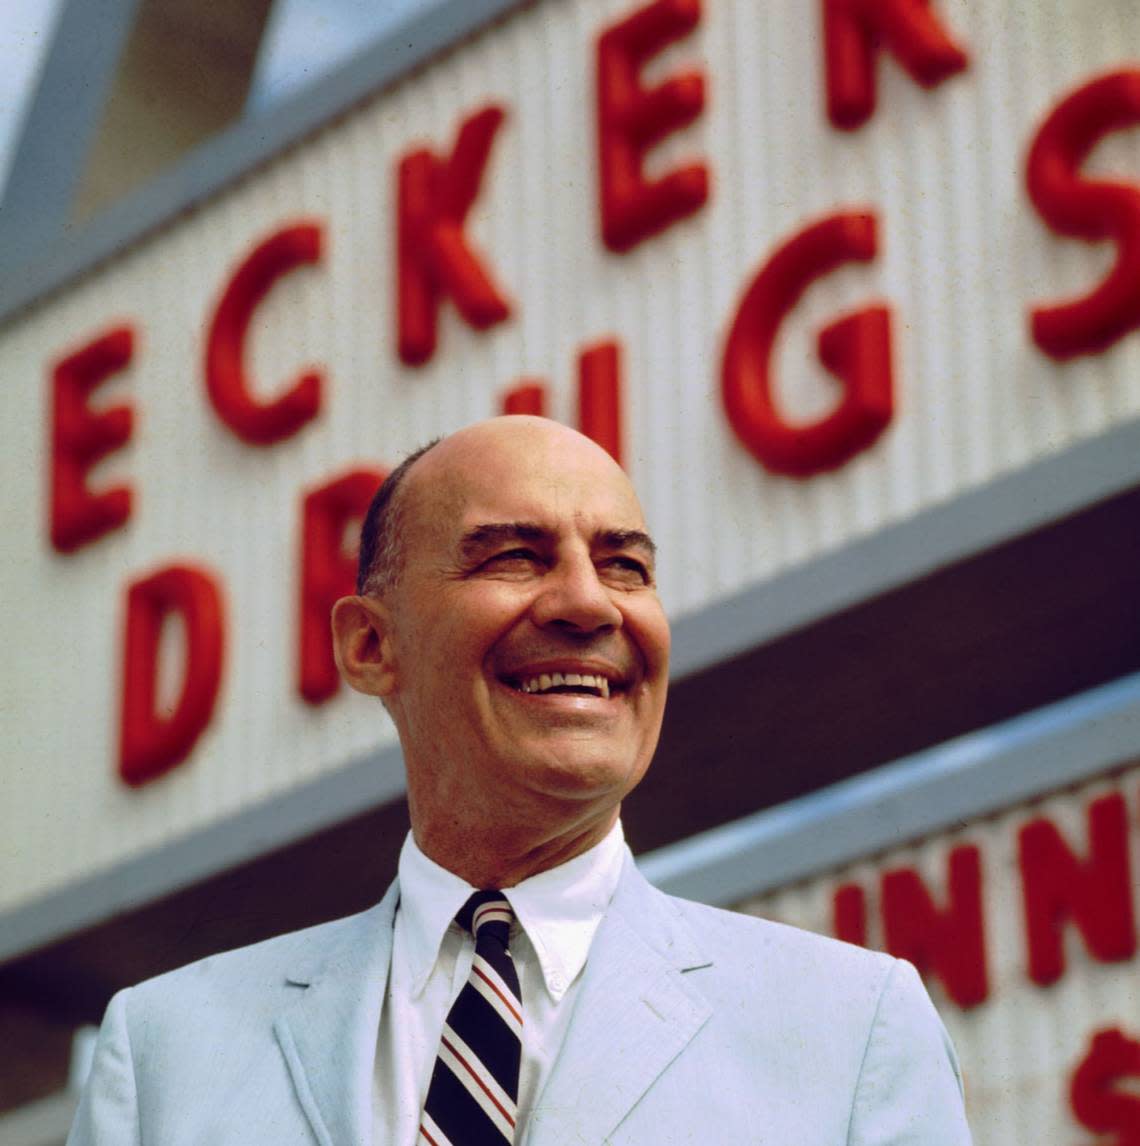 Jack Eckerd in 1968 at one of his Eckerd drugstores. Miami Herald File